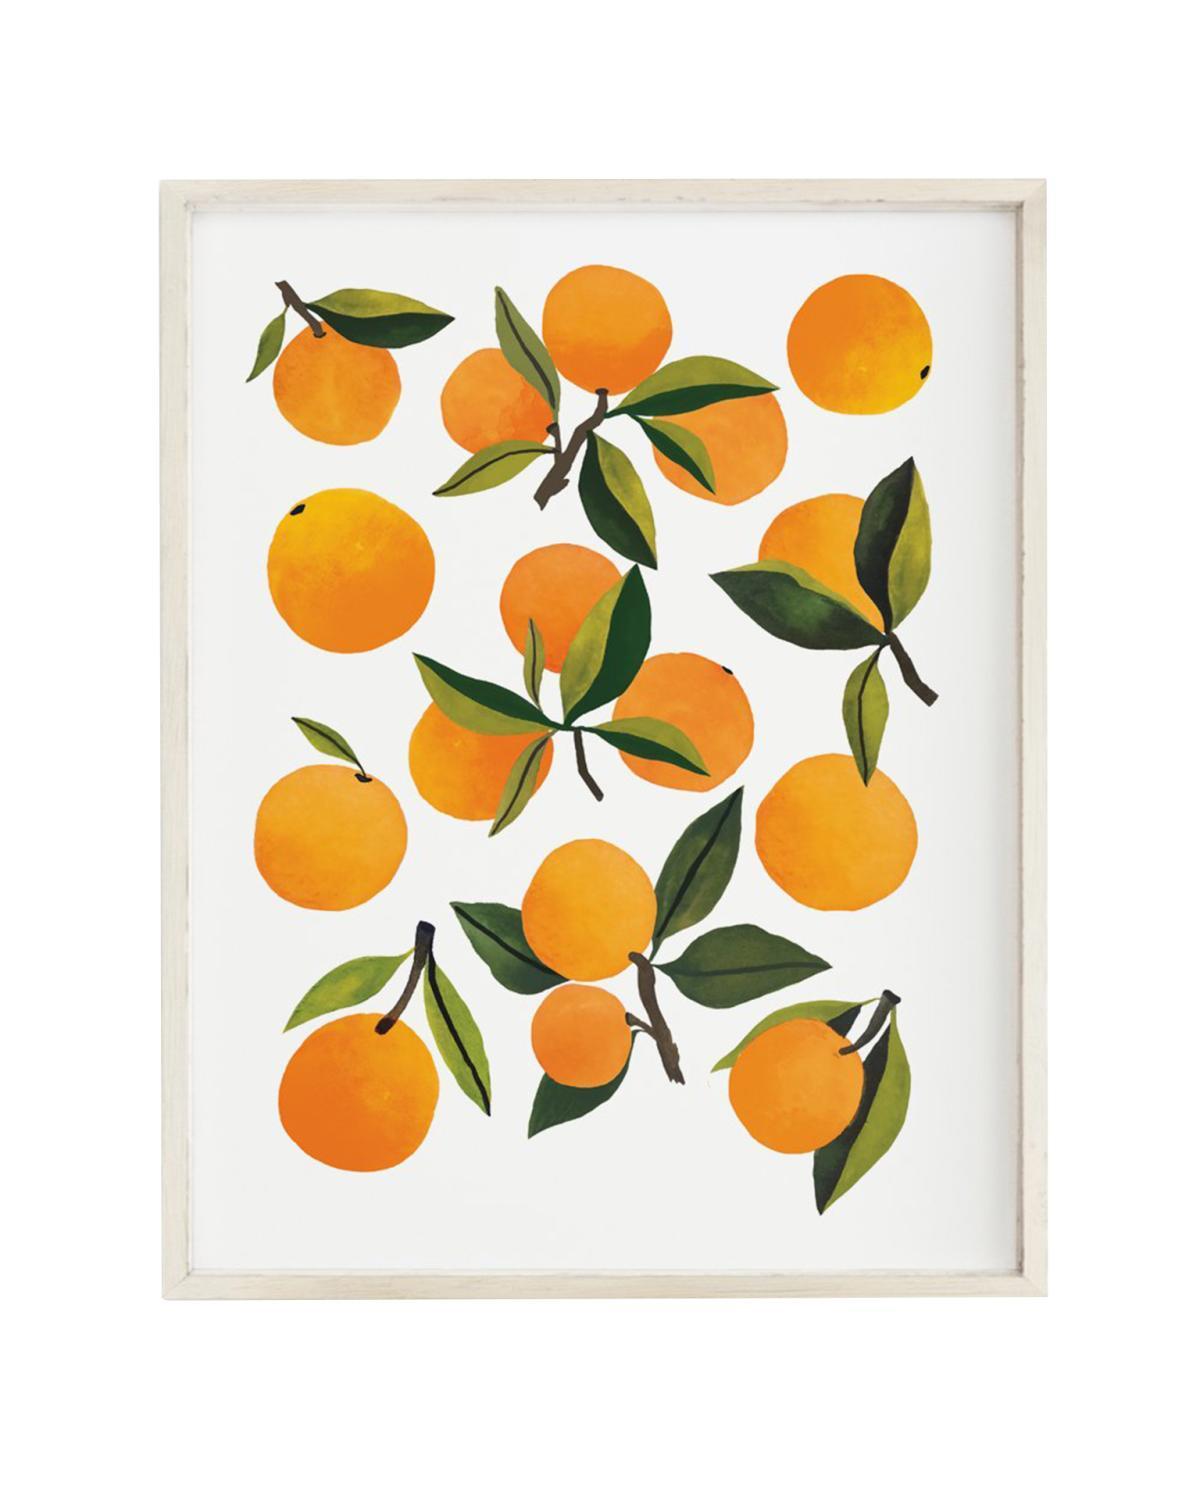 Little clementine kids room fresh clementines art print